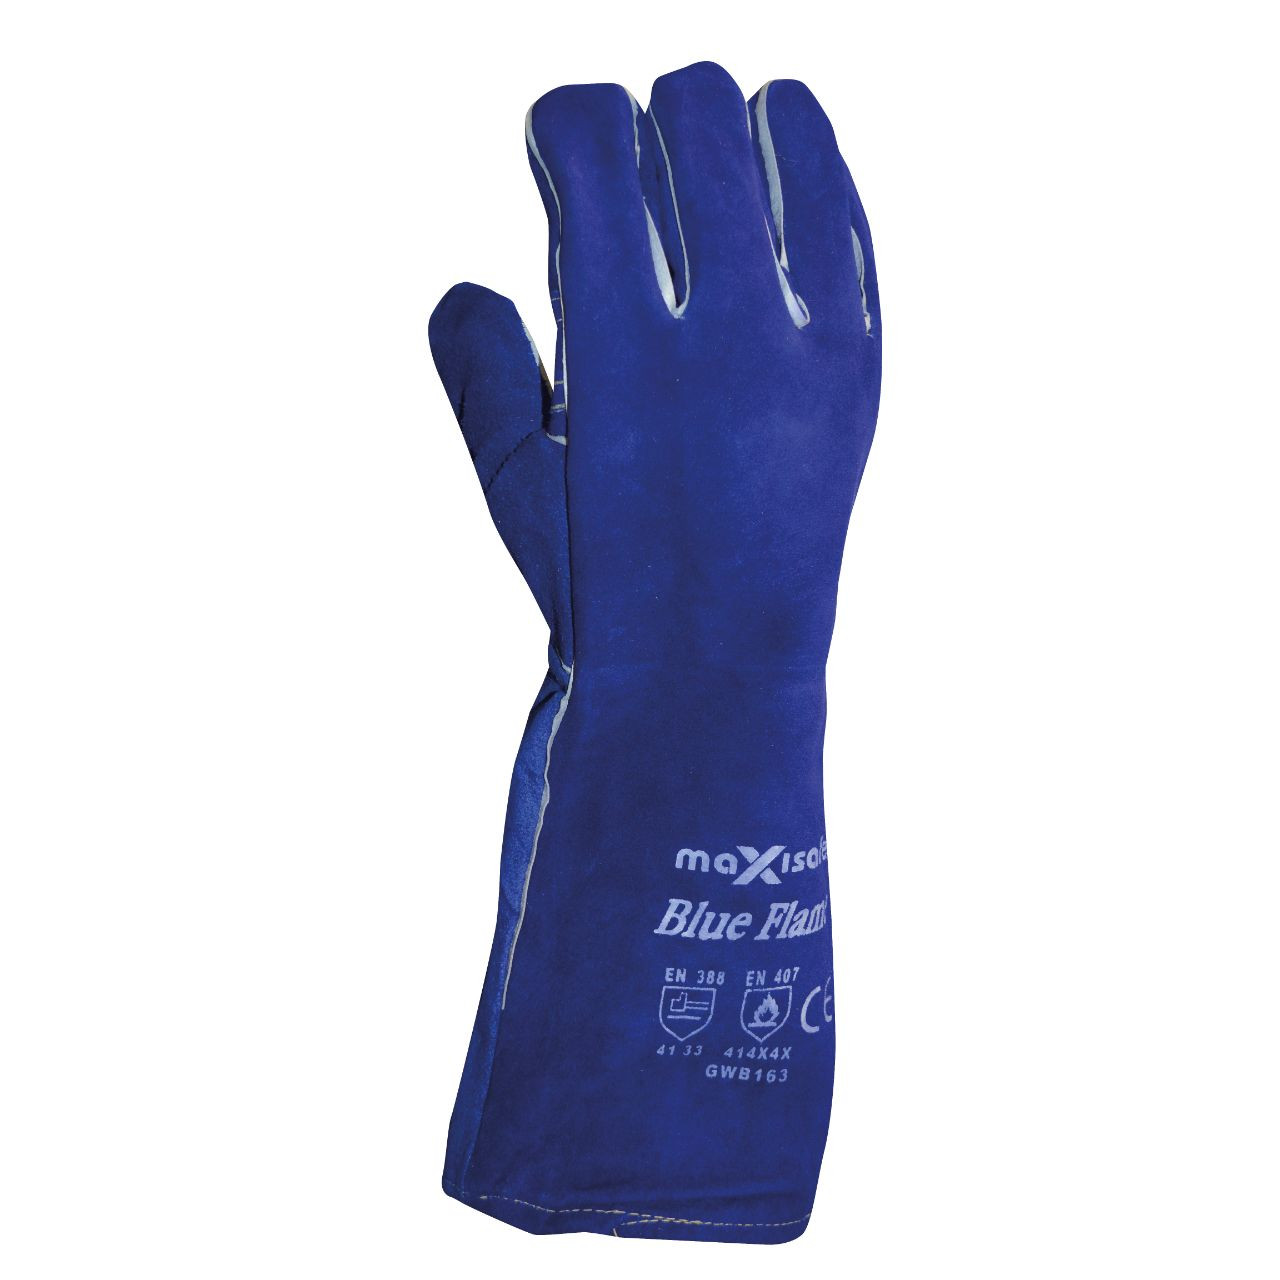 Maxisafe Blue Flame Premium Kevlar Welders Glove